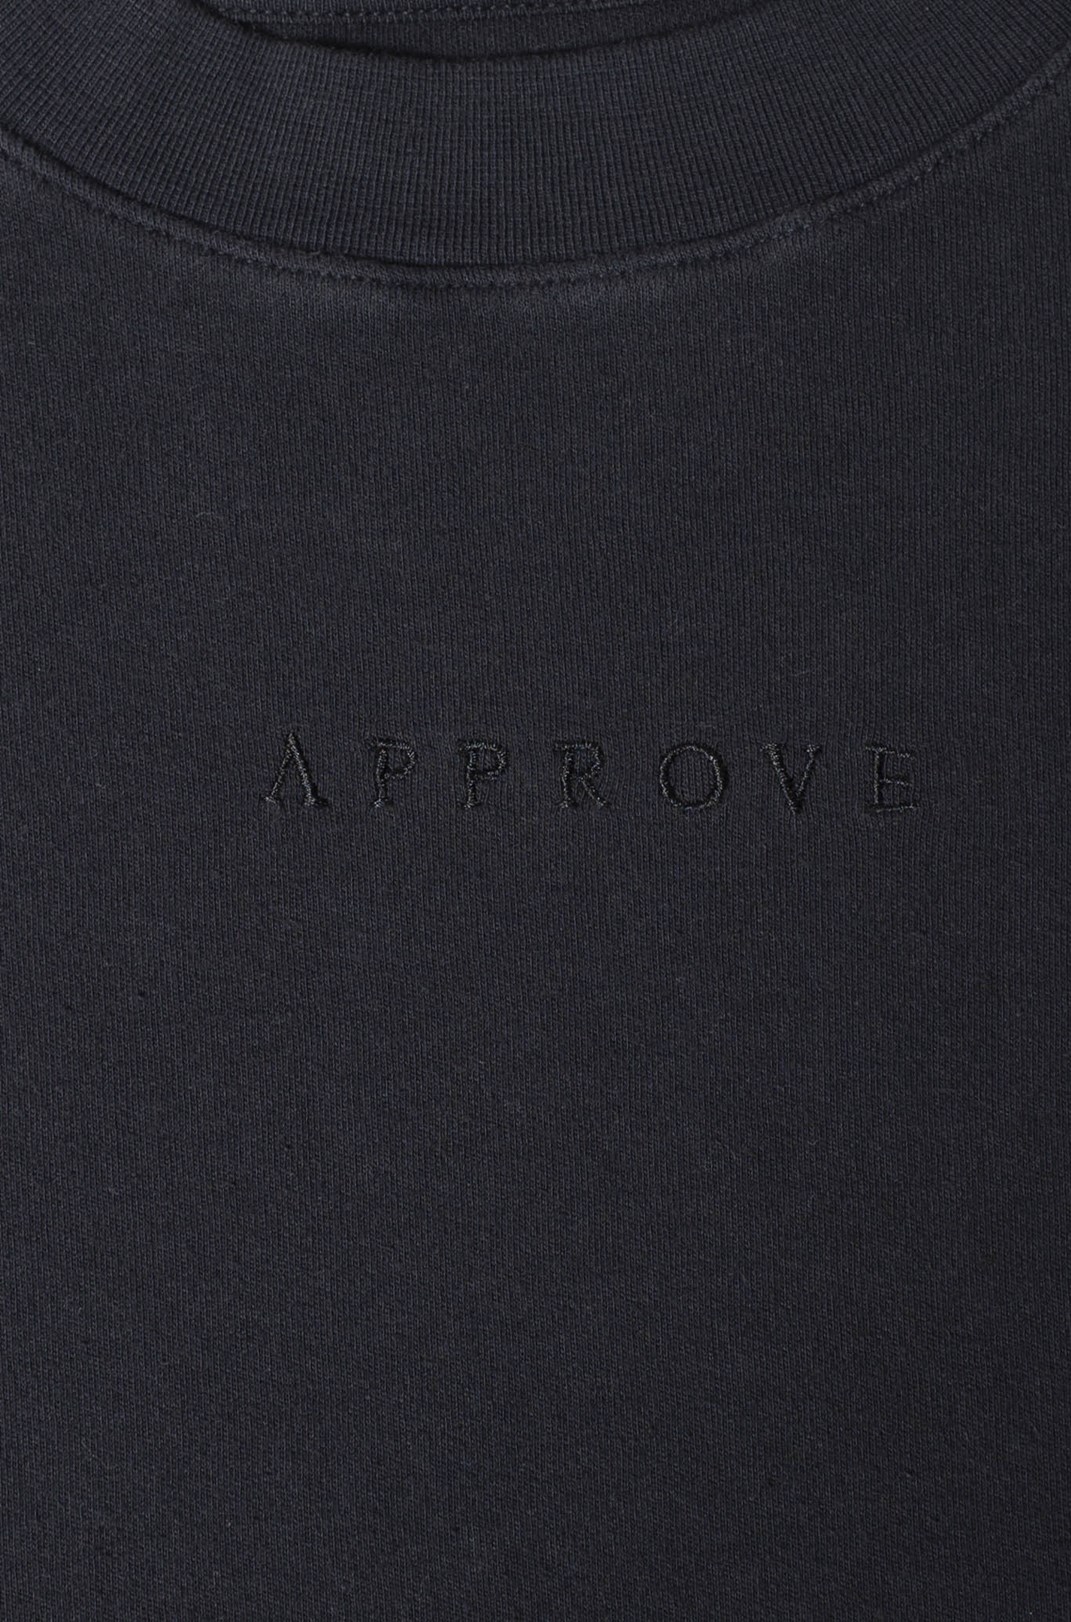 Camiseta Oversized Approve Achronic Preta